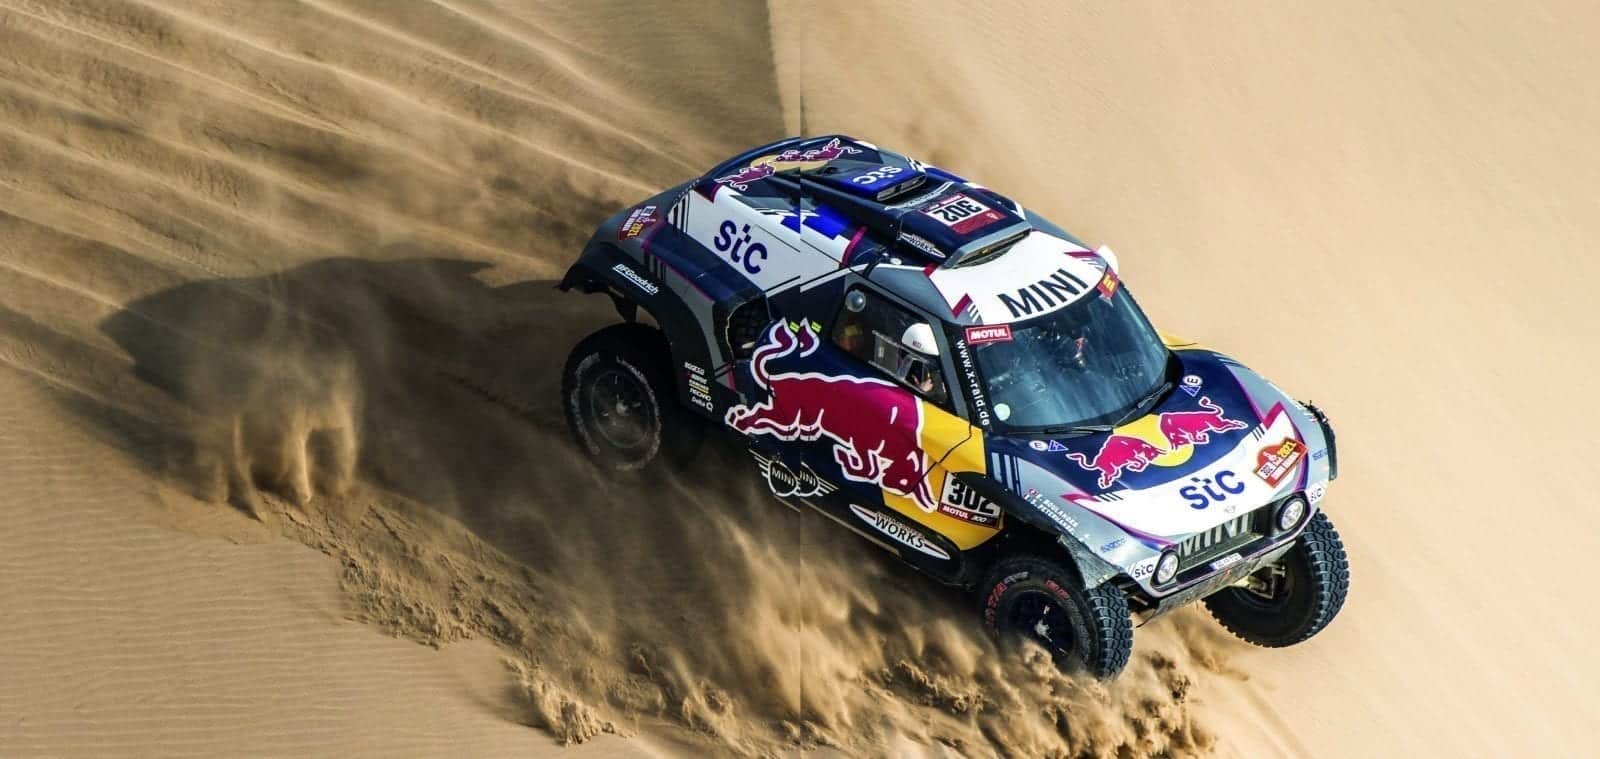 Mini of Stéphane Peterhansel tackes the sand dunes of Dakar 2021